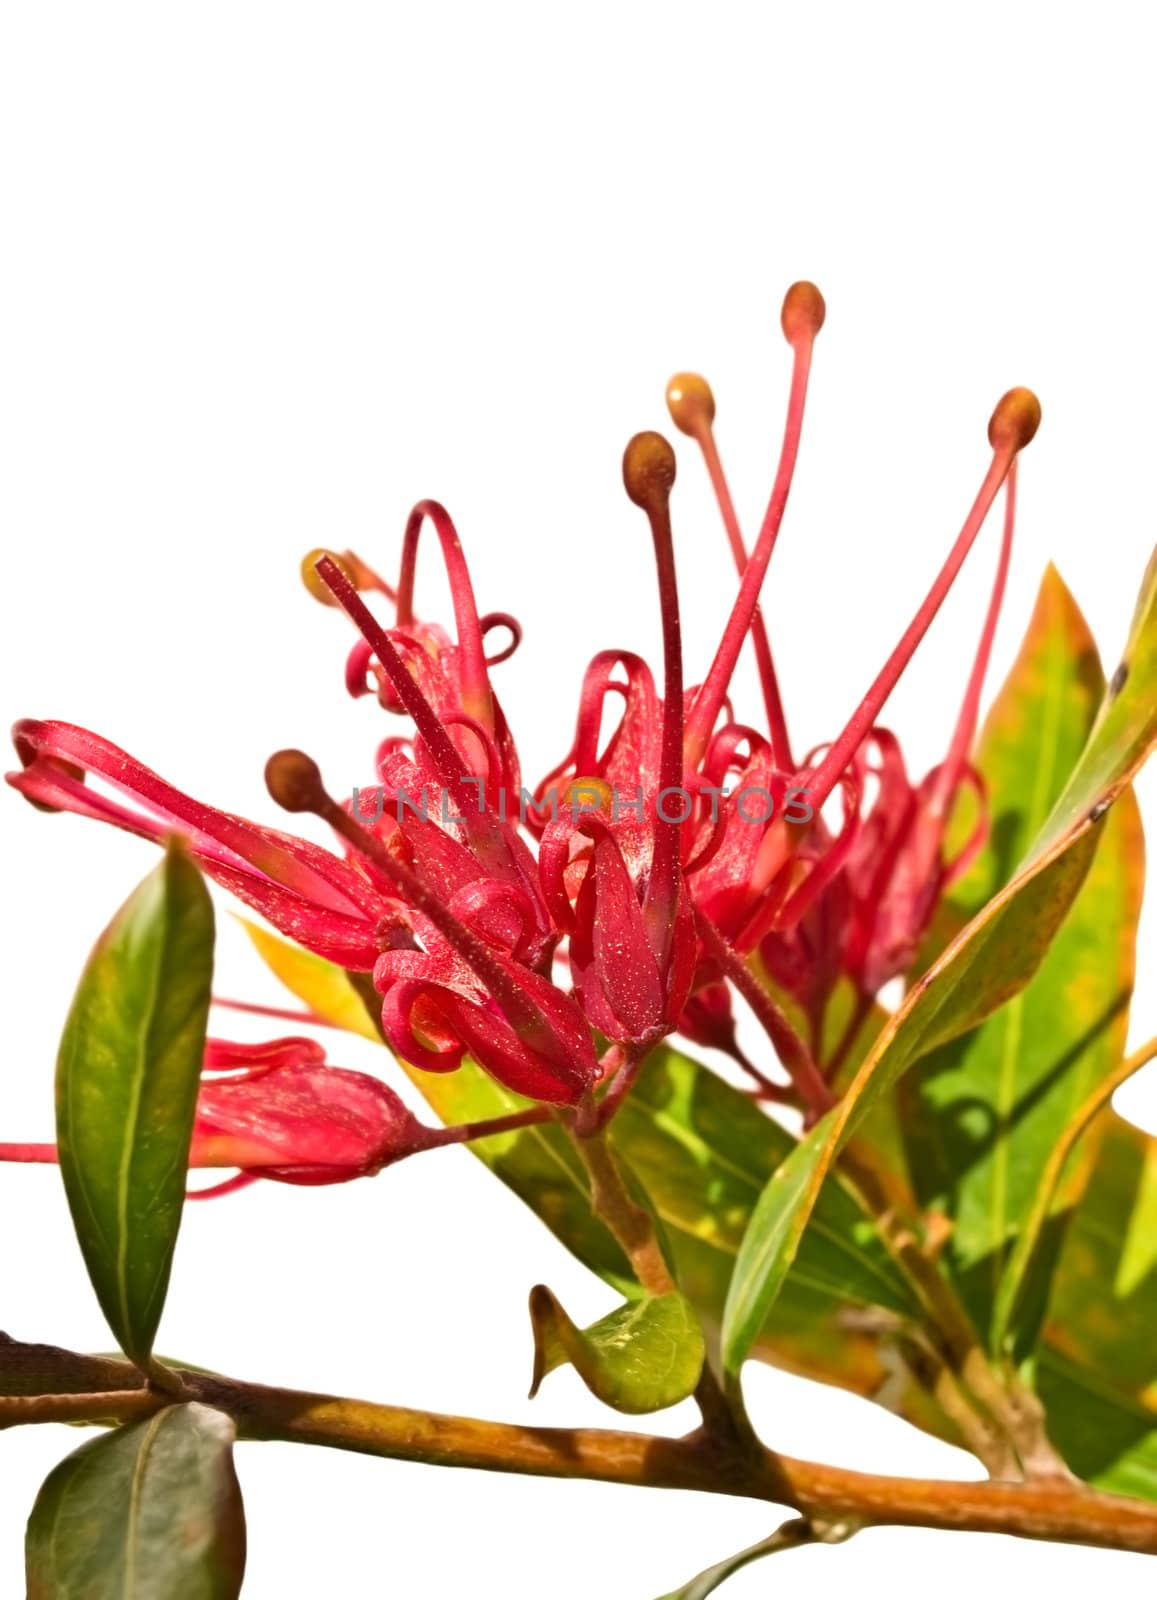 grevillea splendour Australian flower isolated with foliage